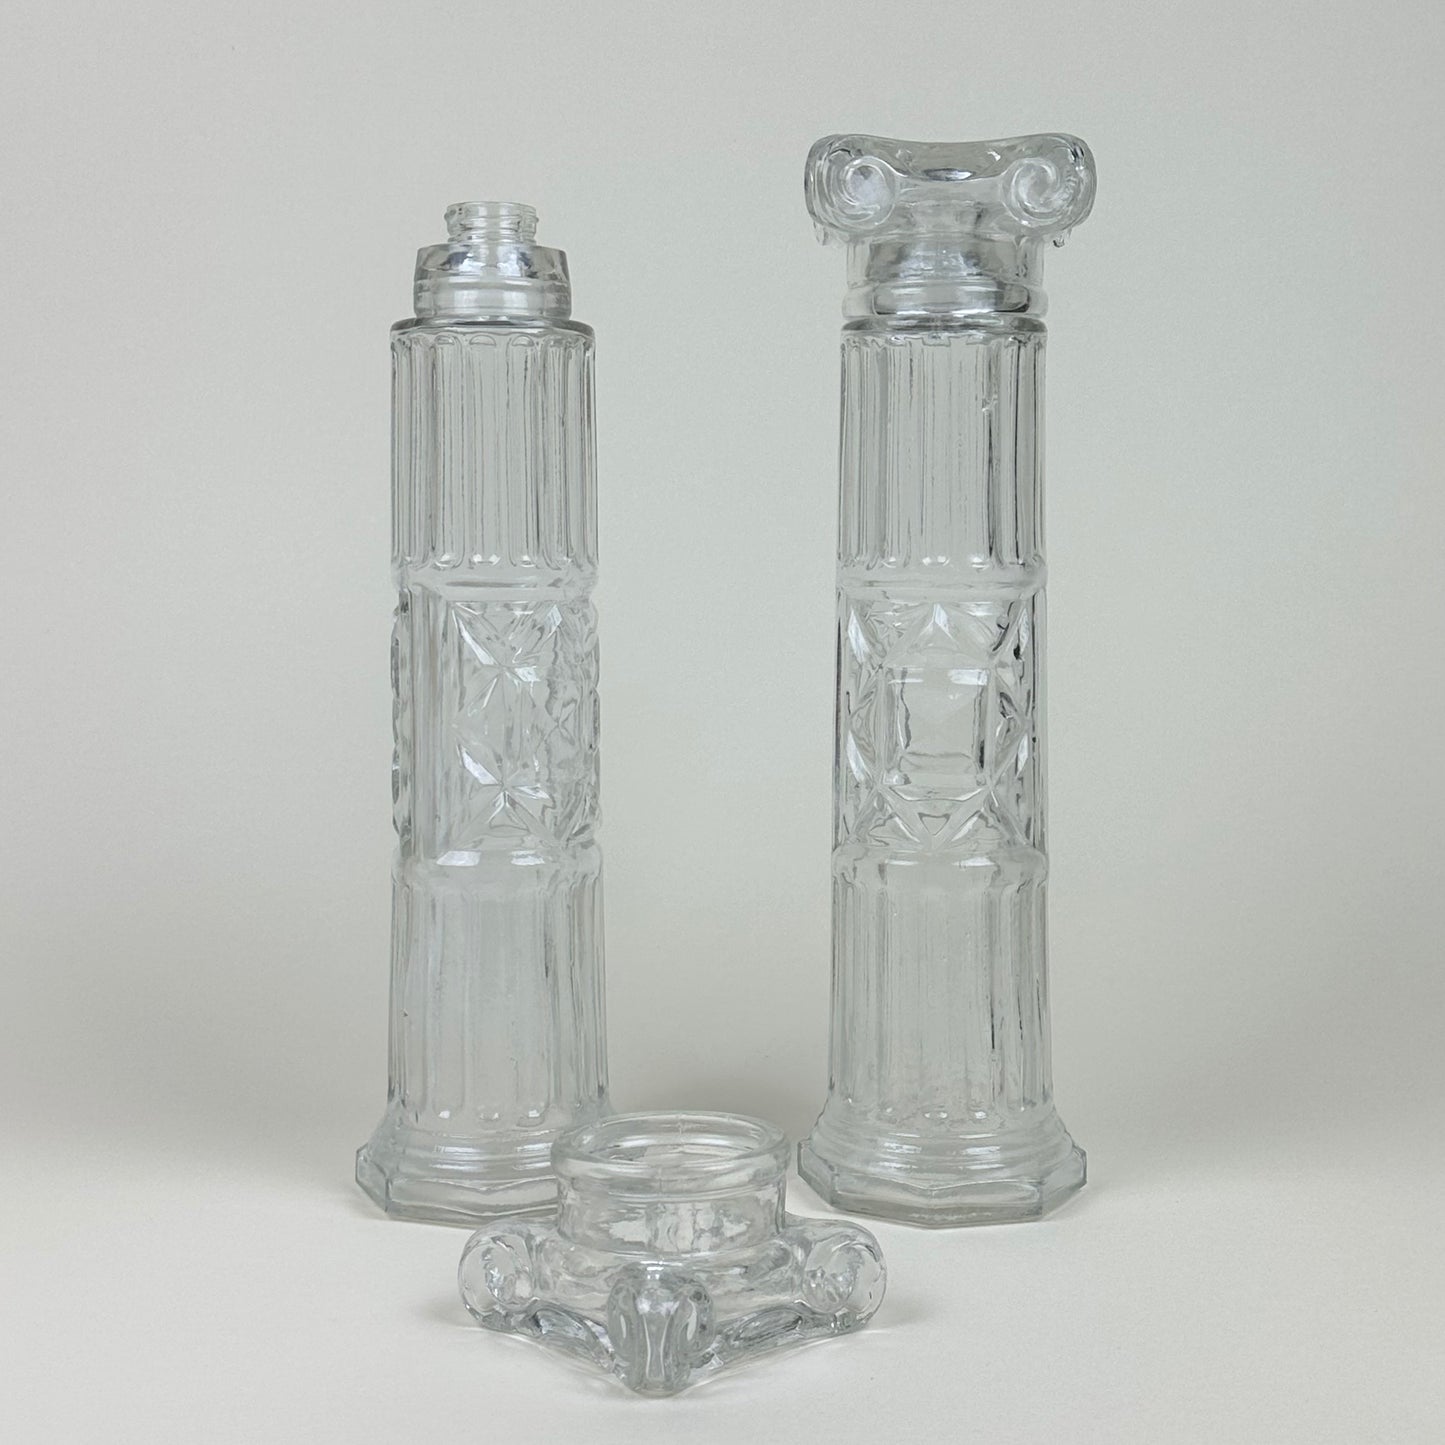 Glass bottles shaped like Roman pillars, pair